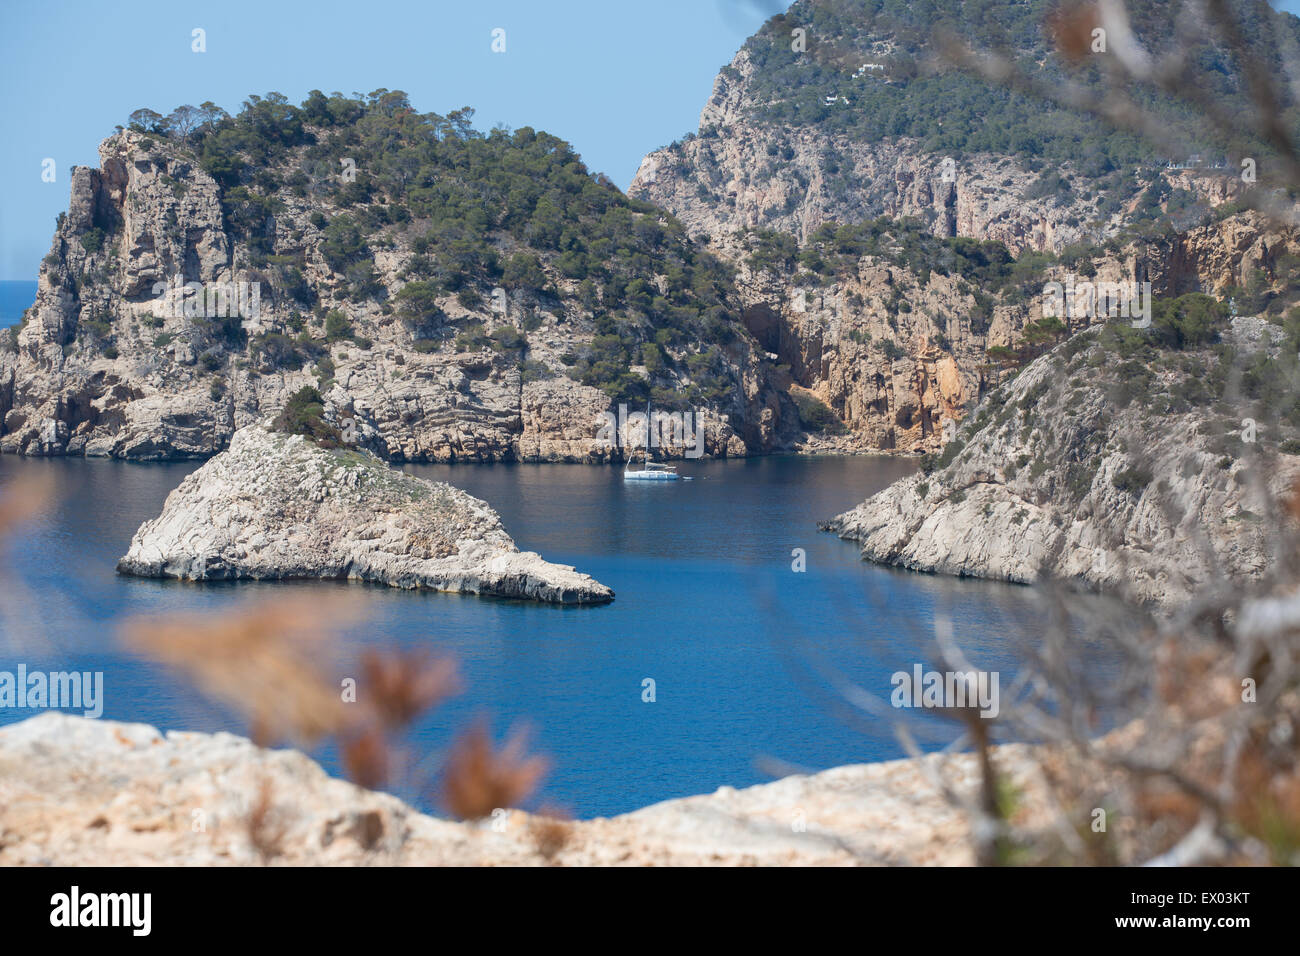 View of rocky coastline, Ibiza, Spain Stock Photo